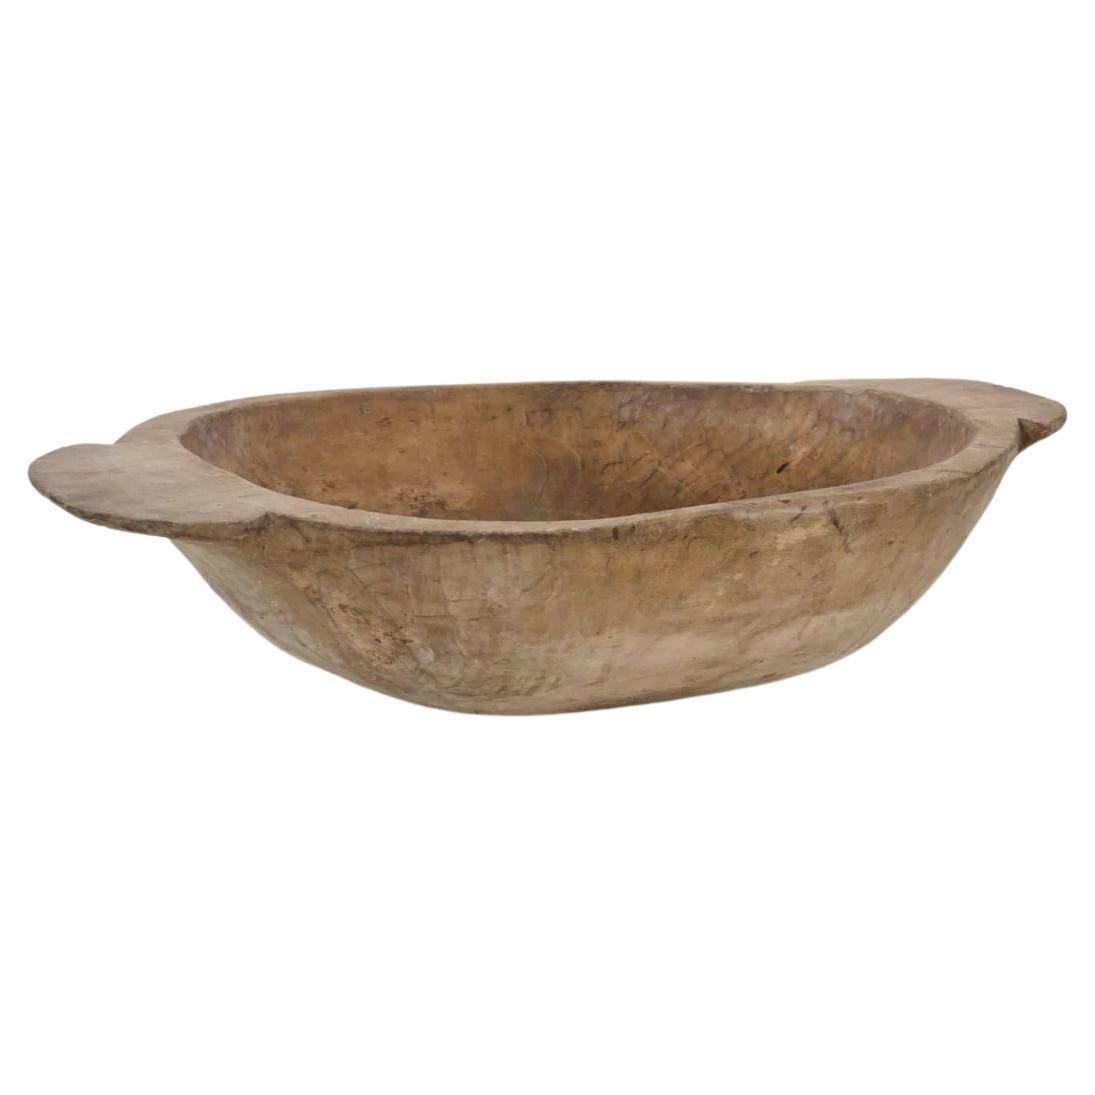 Very big charming Swedish wooden bowl, circa 1790 - 1810. For Sale